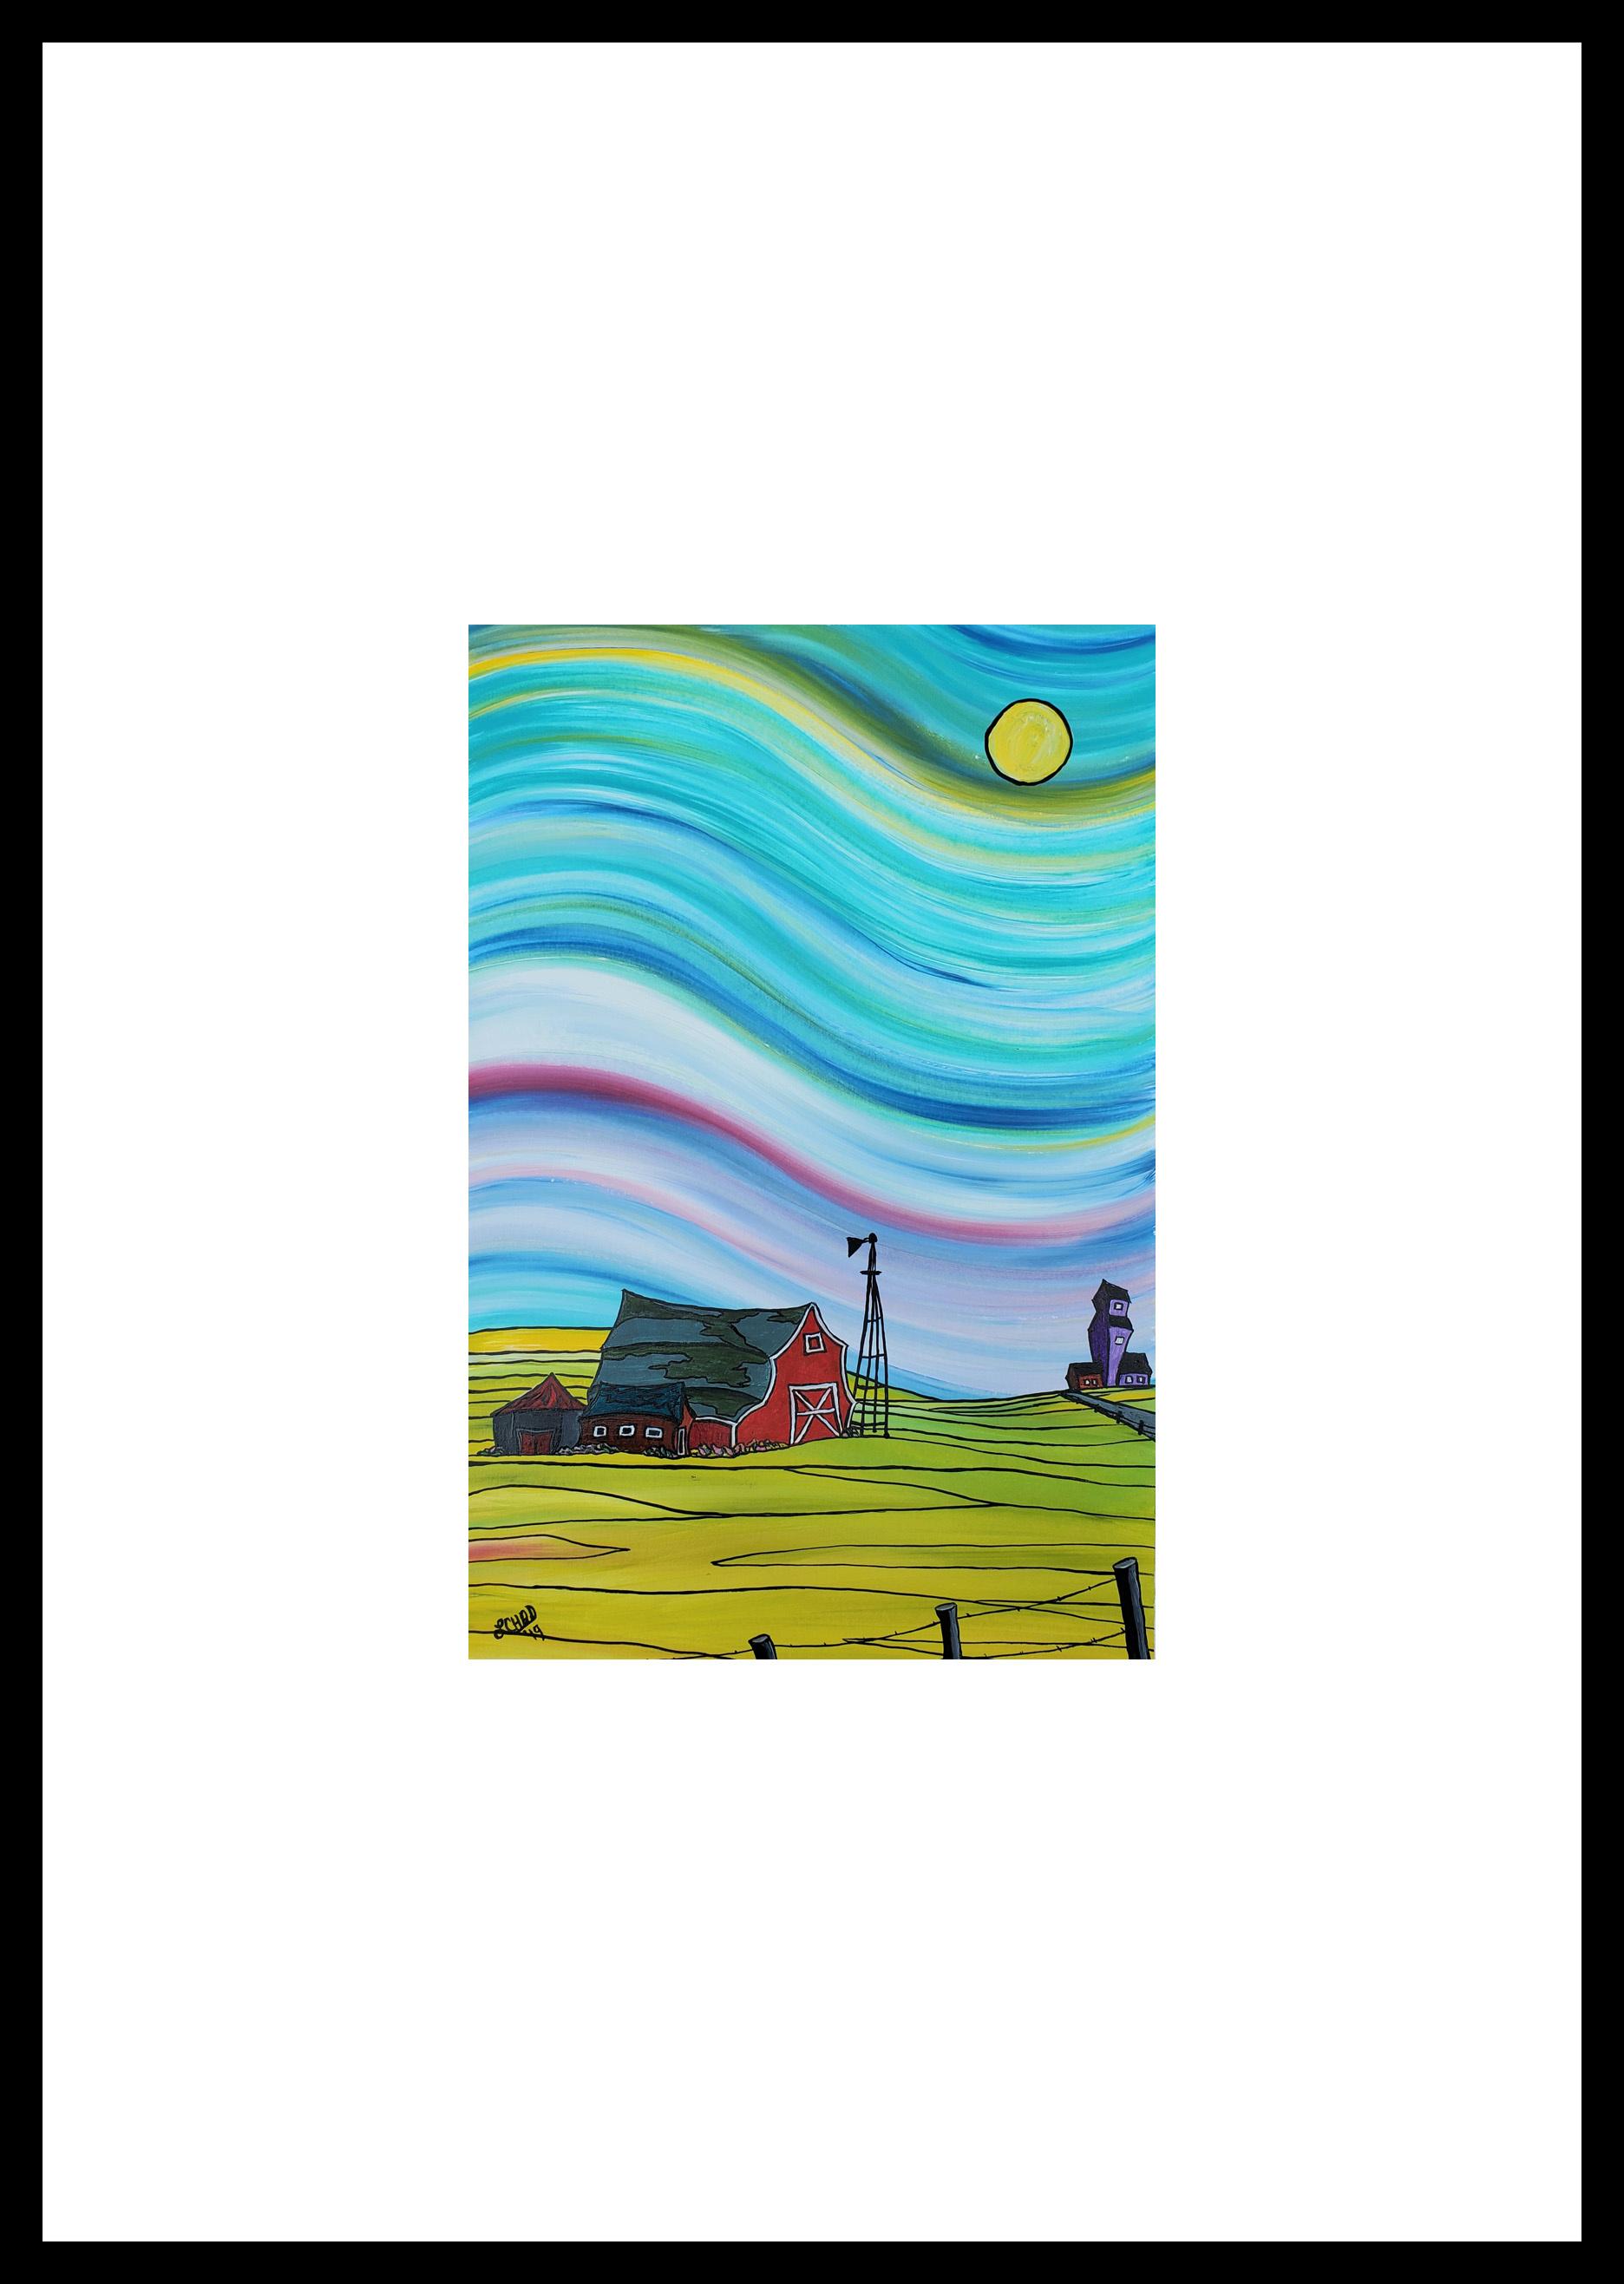 2019-11 "Prairie South II"
Image: 11" x 16.75"
Framed: 18" x 24"
Acrylic on 246 lb paper
$350.00
